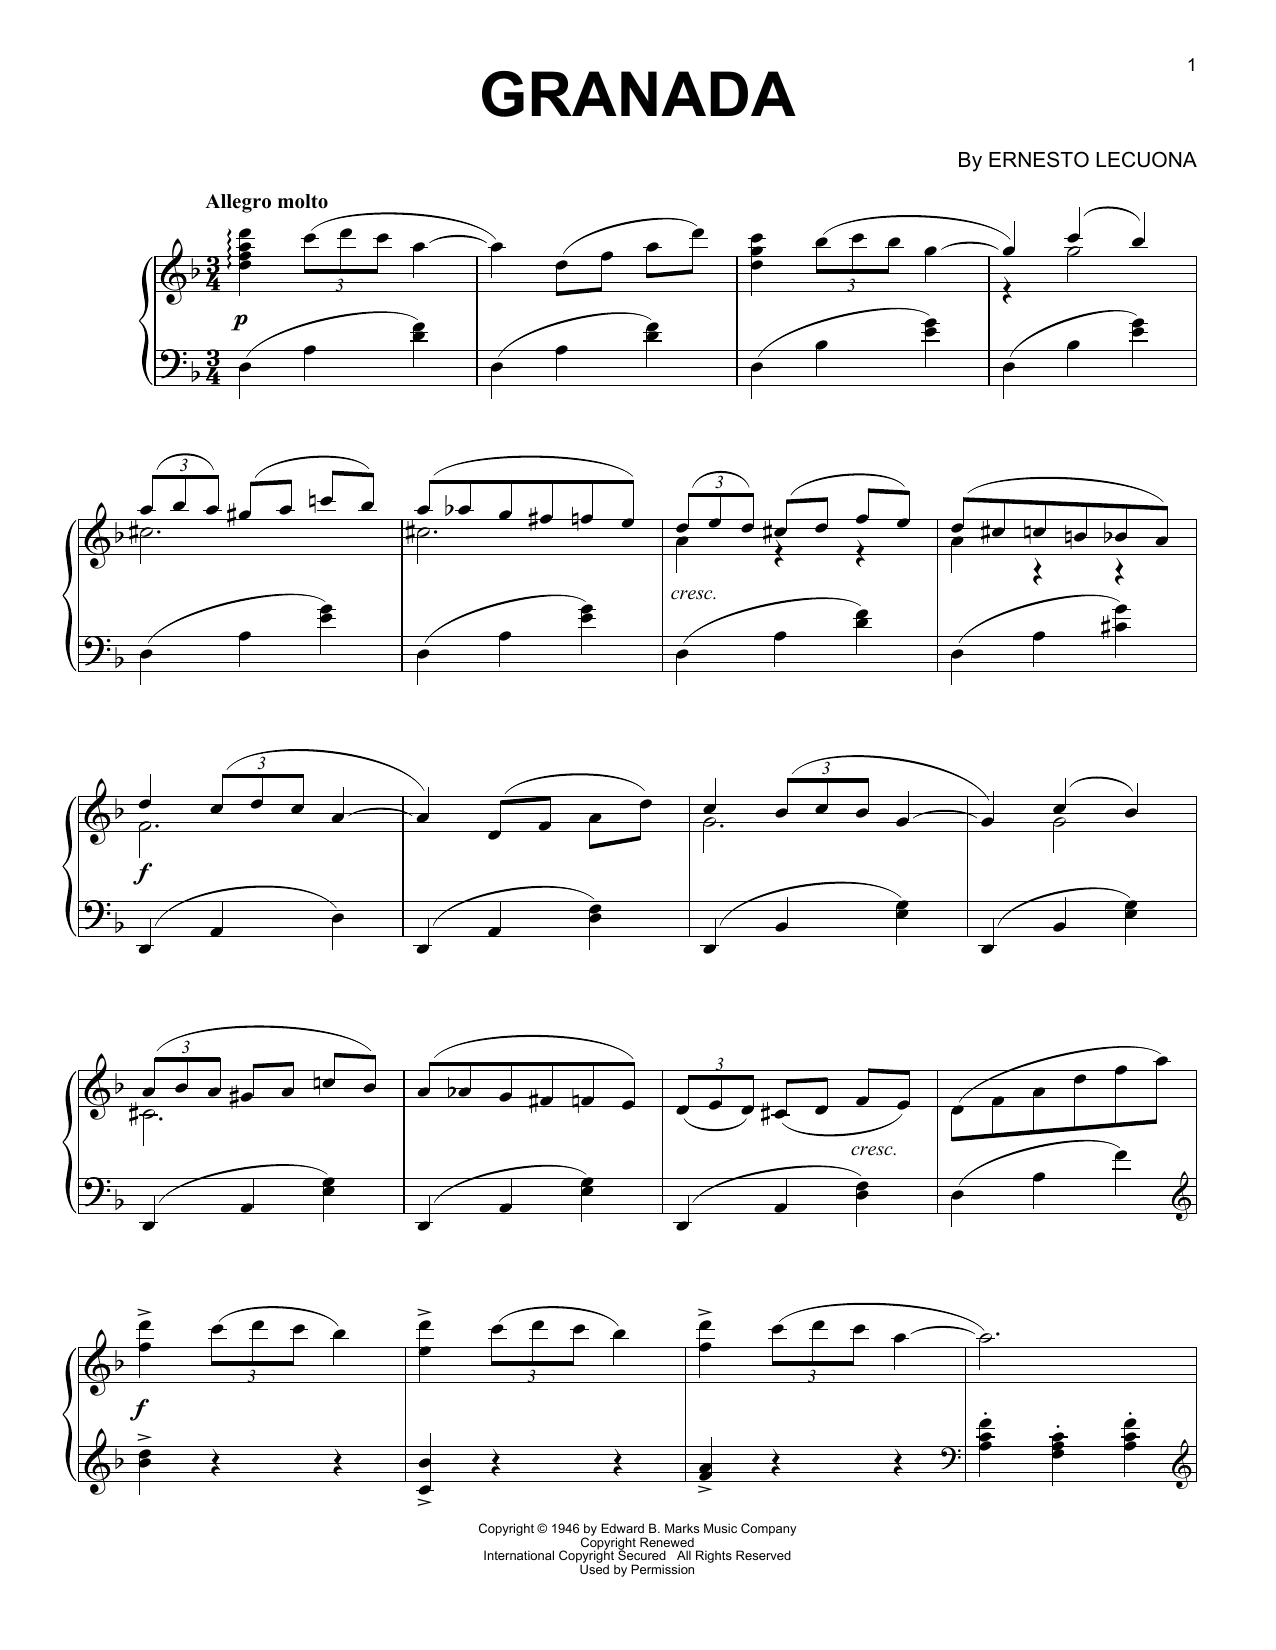 Download Ernesto Lecuona Granada Sheet Music and learn how to play Piano PDF digital score in minutes